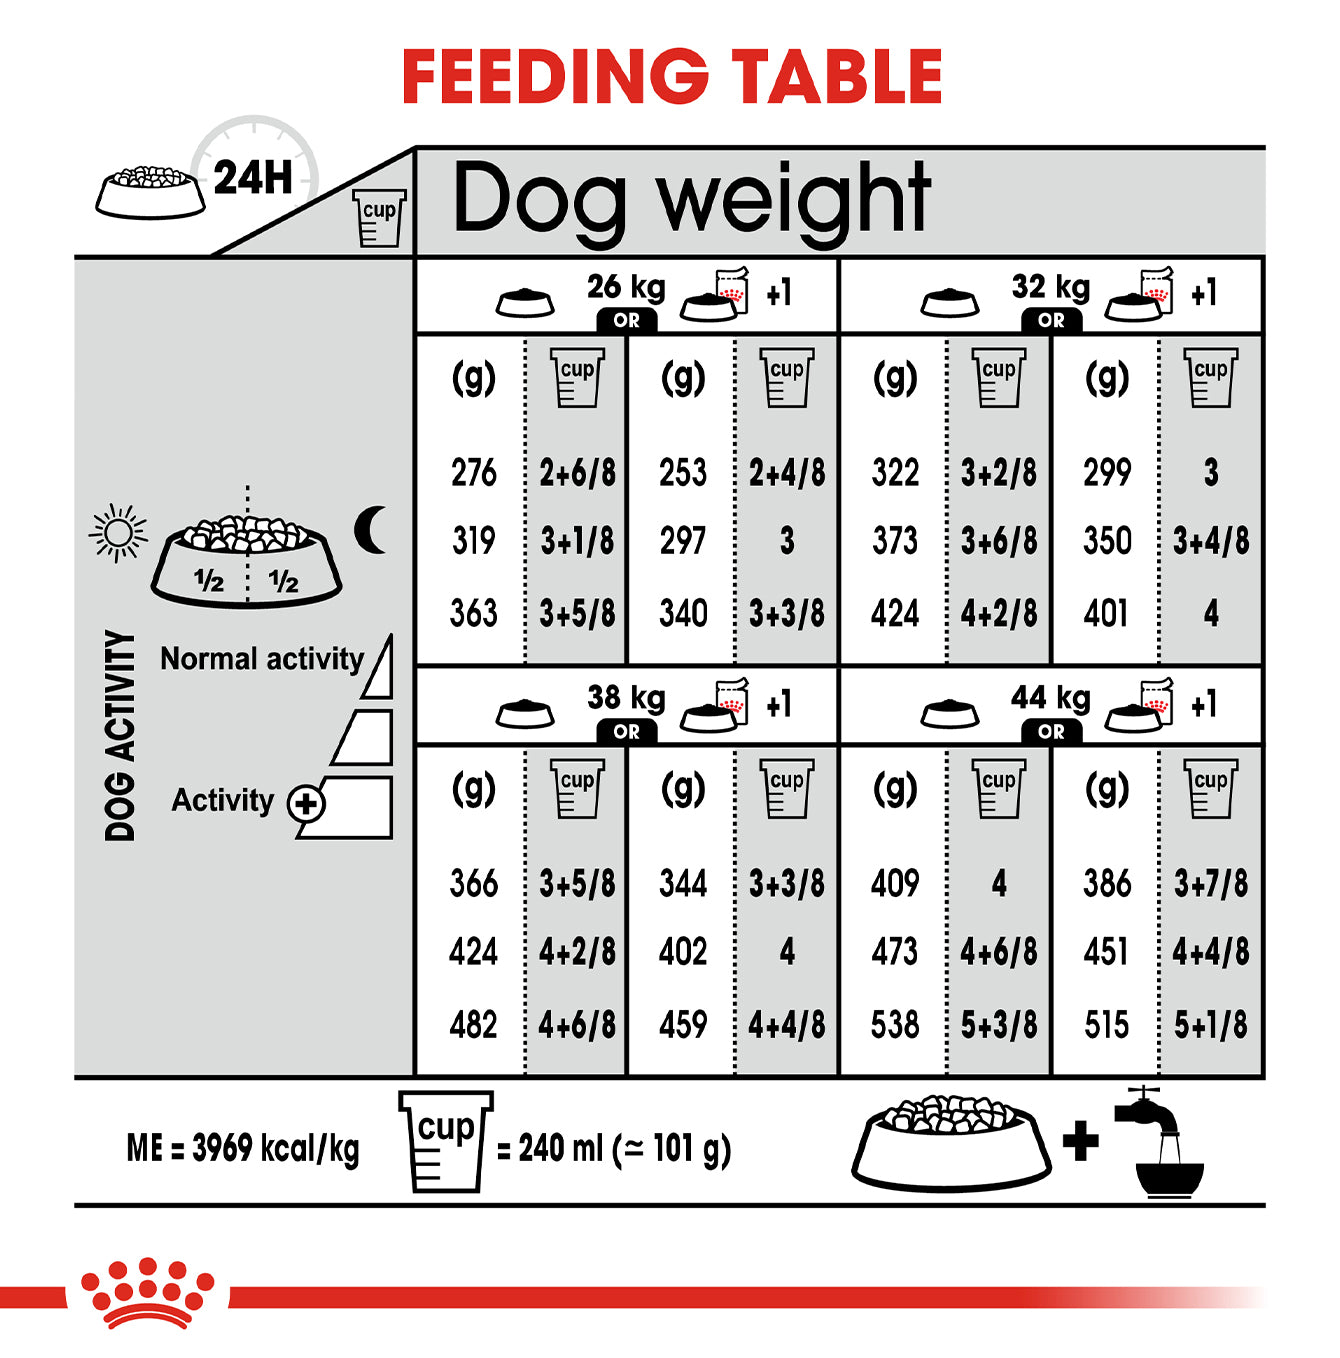 Royal Canin Maxi Adult Derma Comfort Dog Food 10KG